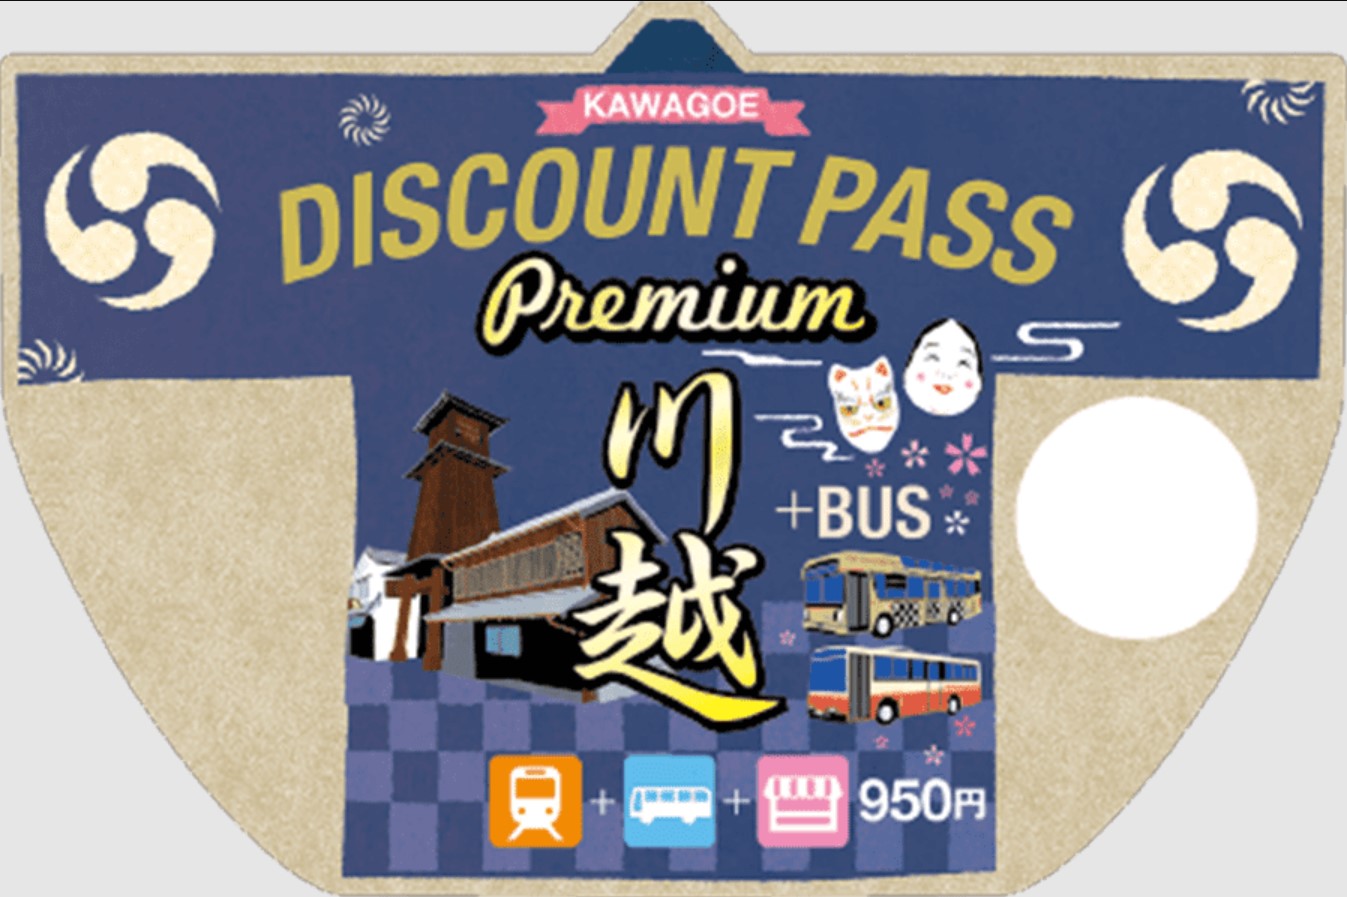 Kawagoe Discount Pass Premium